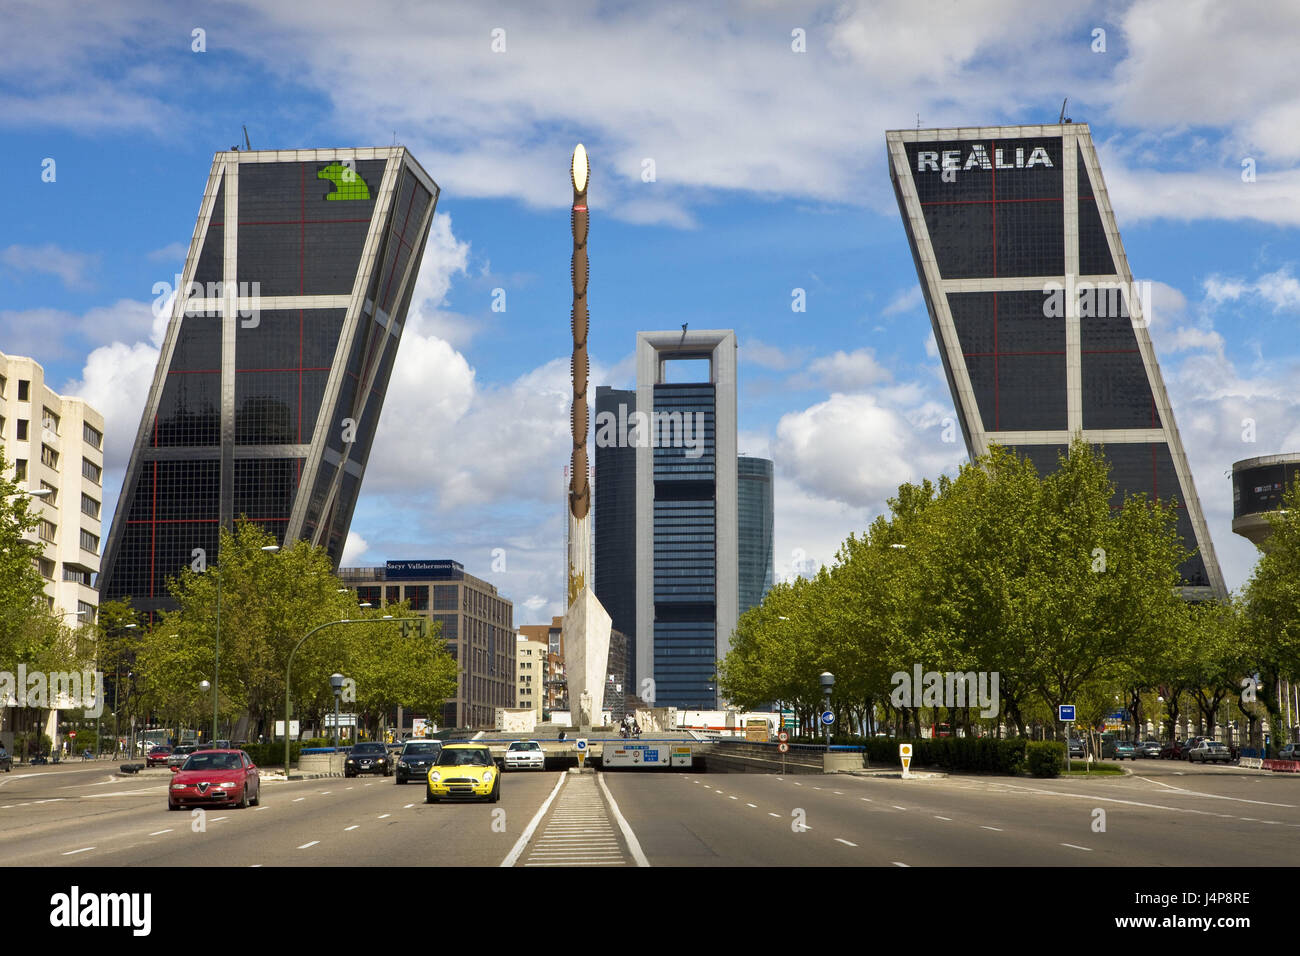 Spagna, Madrid, Plaza Castilla, Twin Towers, città capitale, alta sorge, torri, disassato, architettura moderna, luogo di interesse, turismo, street, automobili, cieli, nubi Foto Stock